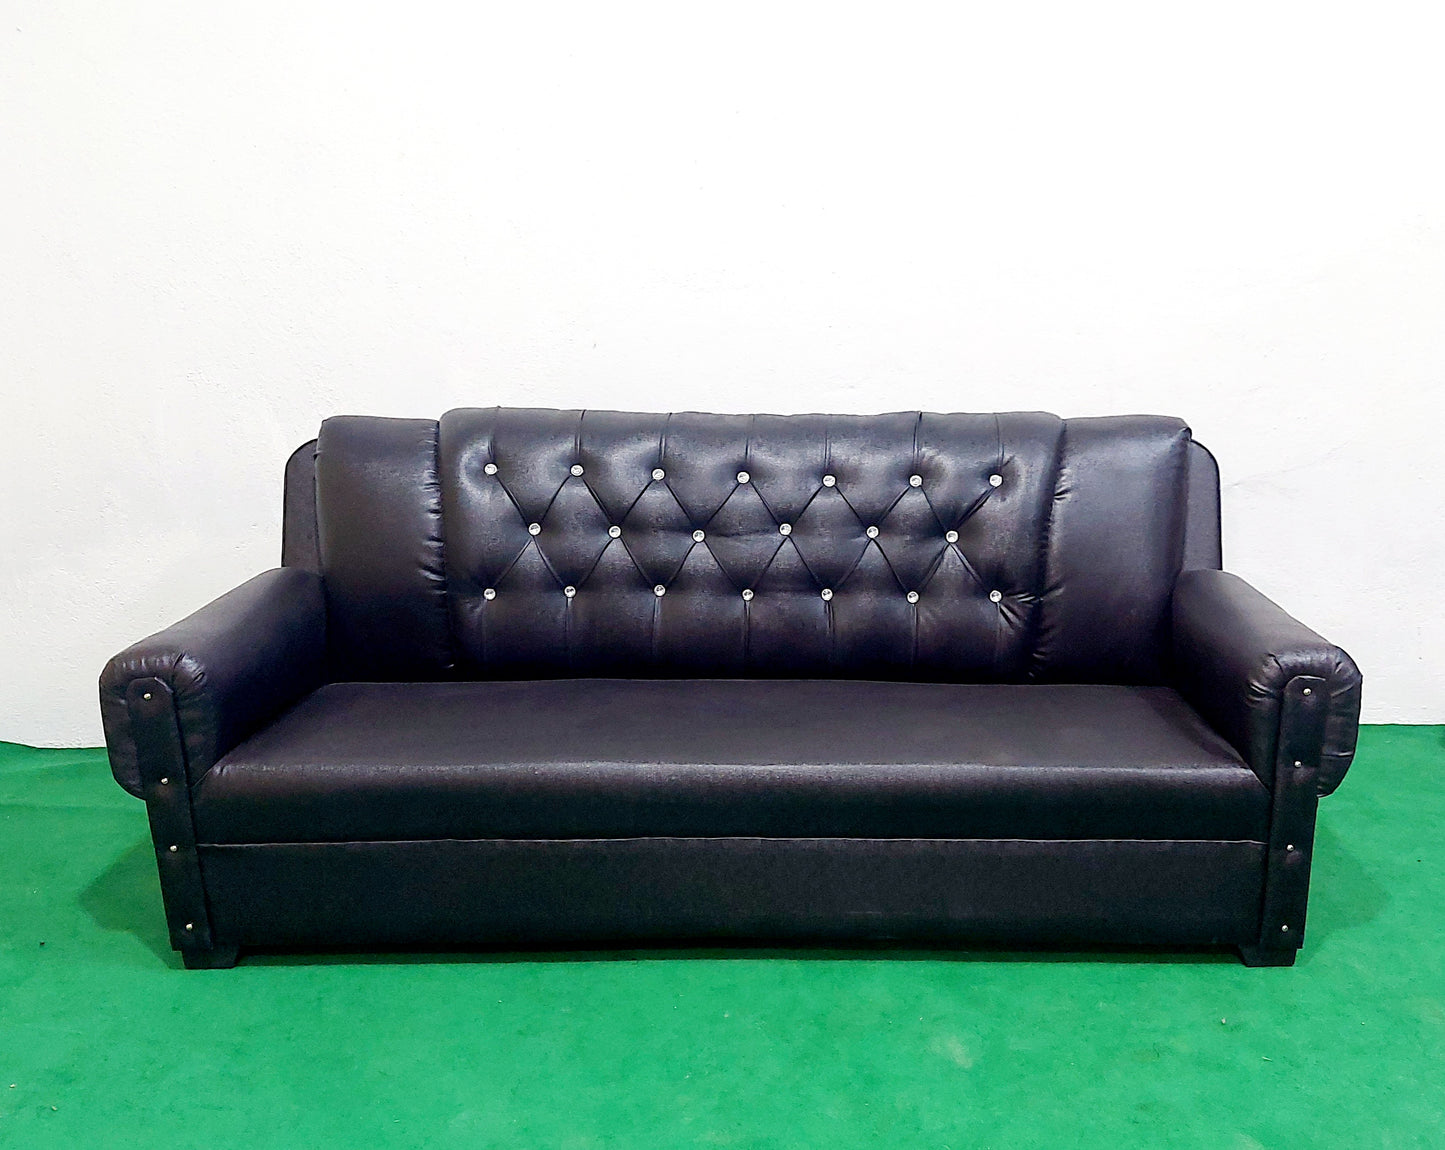 Bowzar 5 Seater Wooden Sofa Good Quality Ritu Model Black